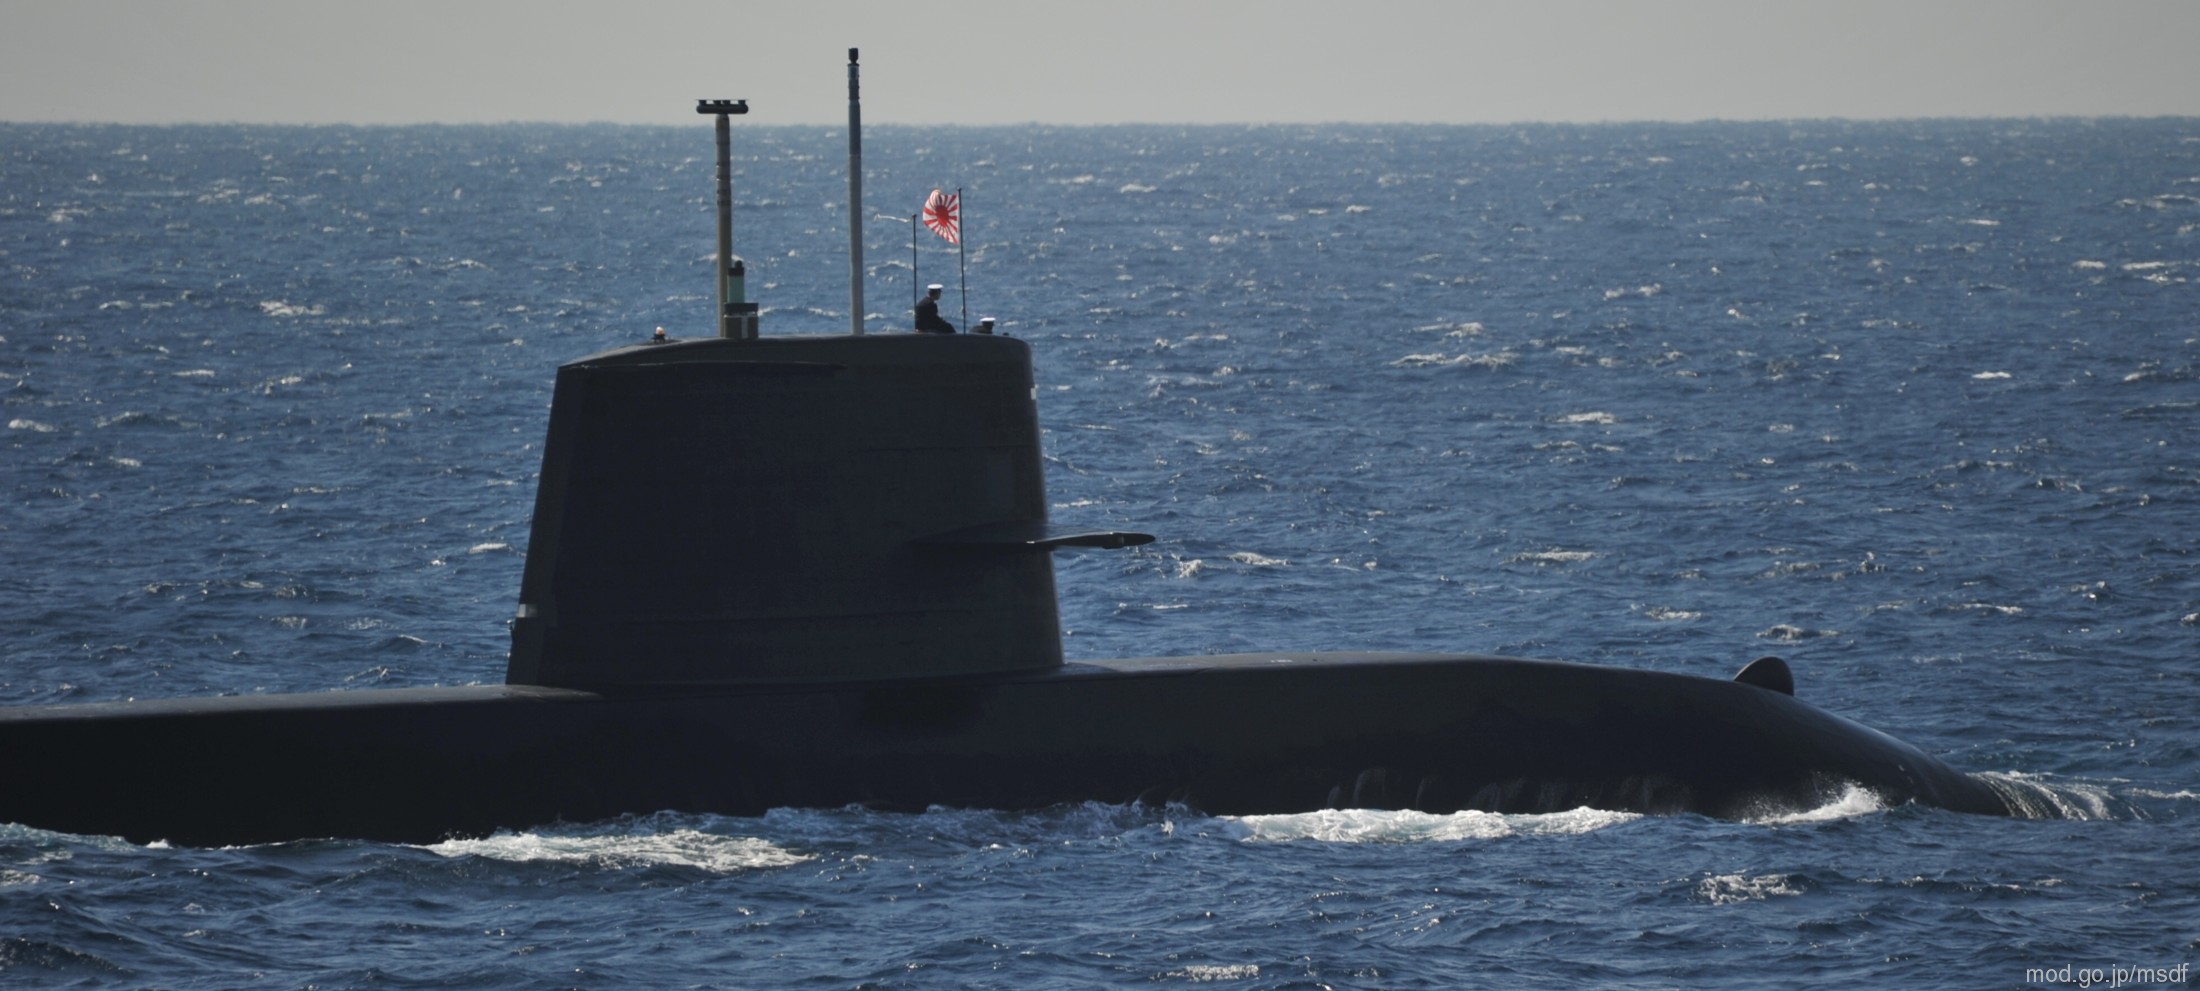 ss-594 jds isoshio oyashio class attack submarine japan maritime self defense force jmsdf 04